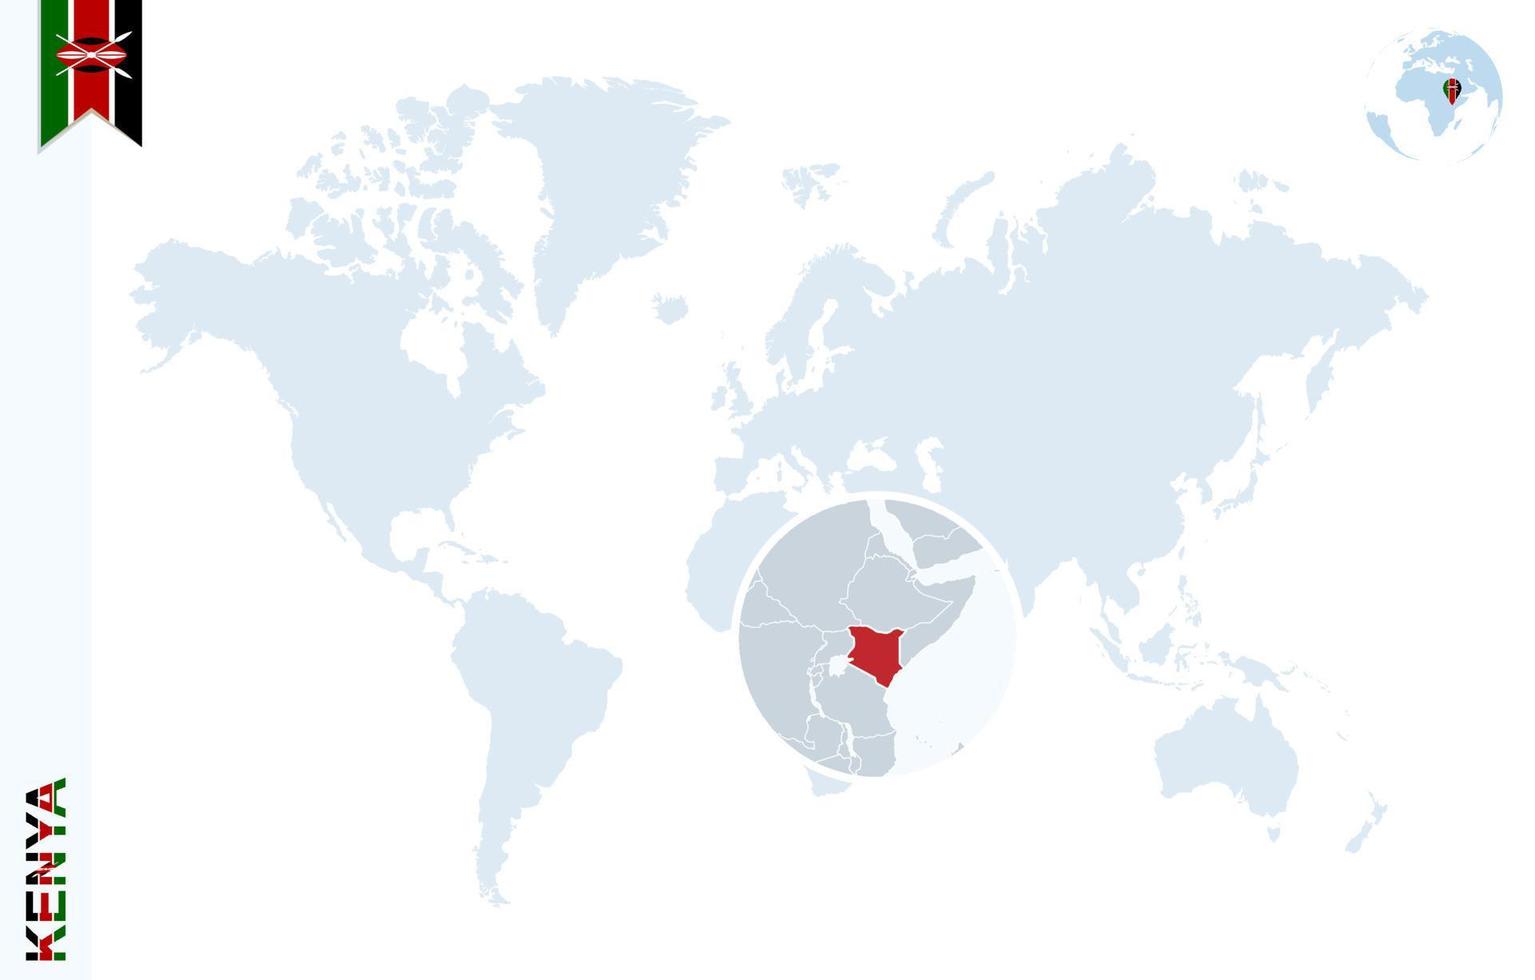 blu mondo carta geografica con ingrandimento su kenya. vettore